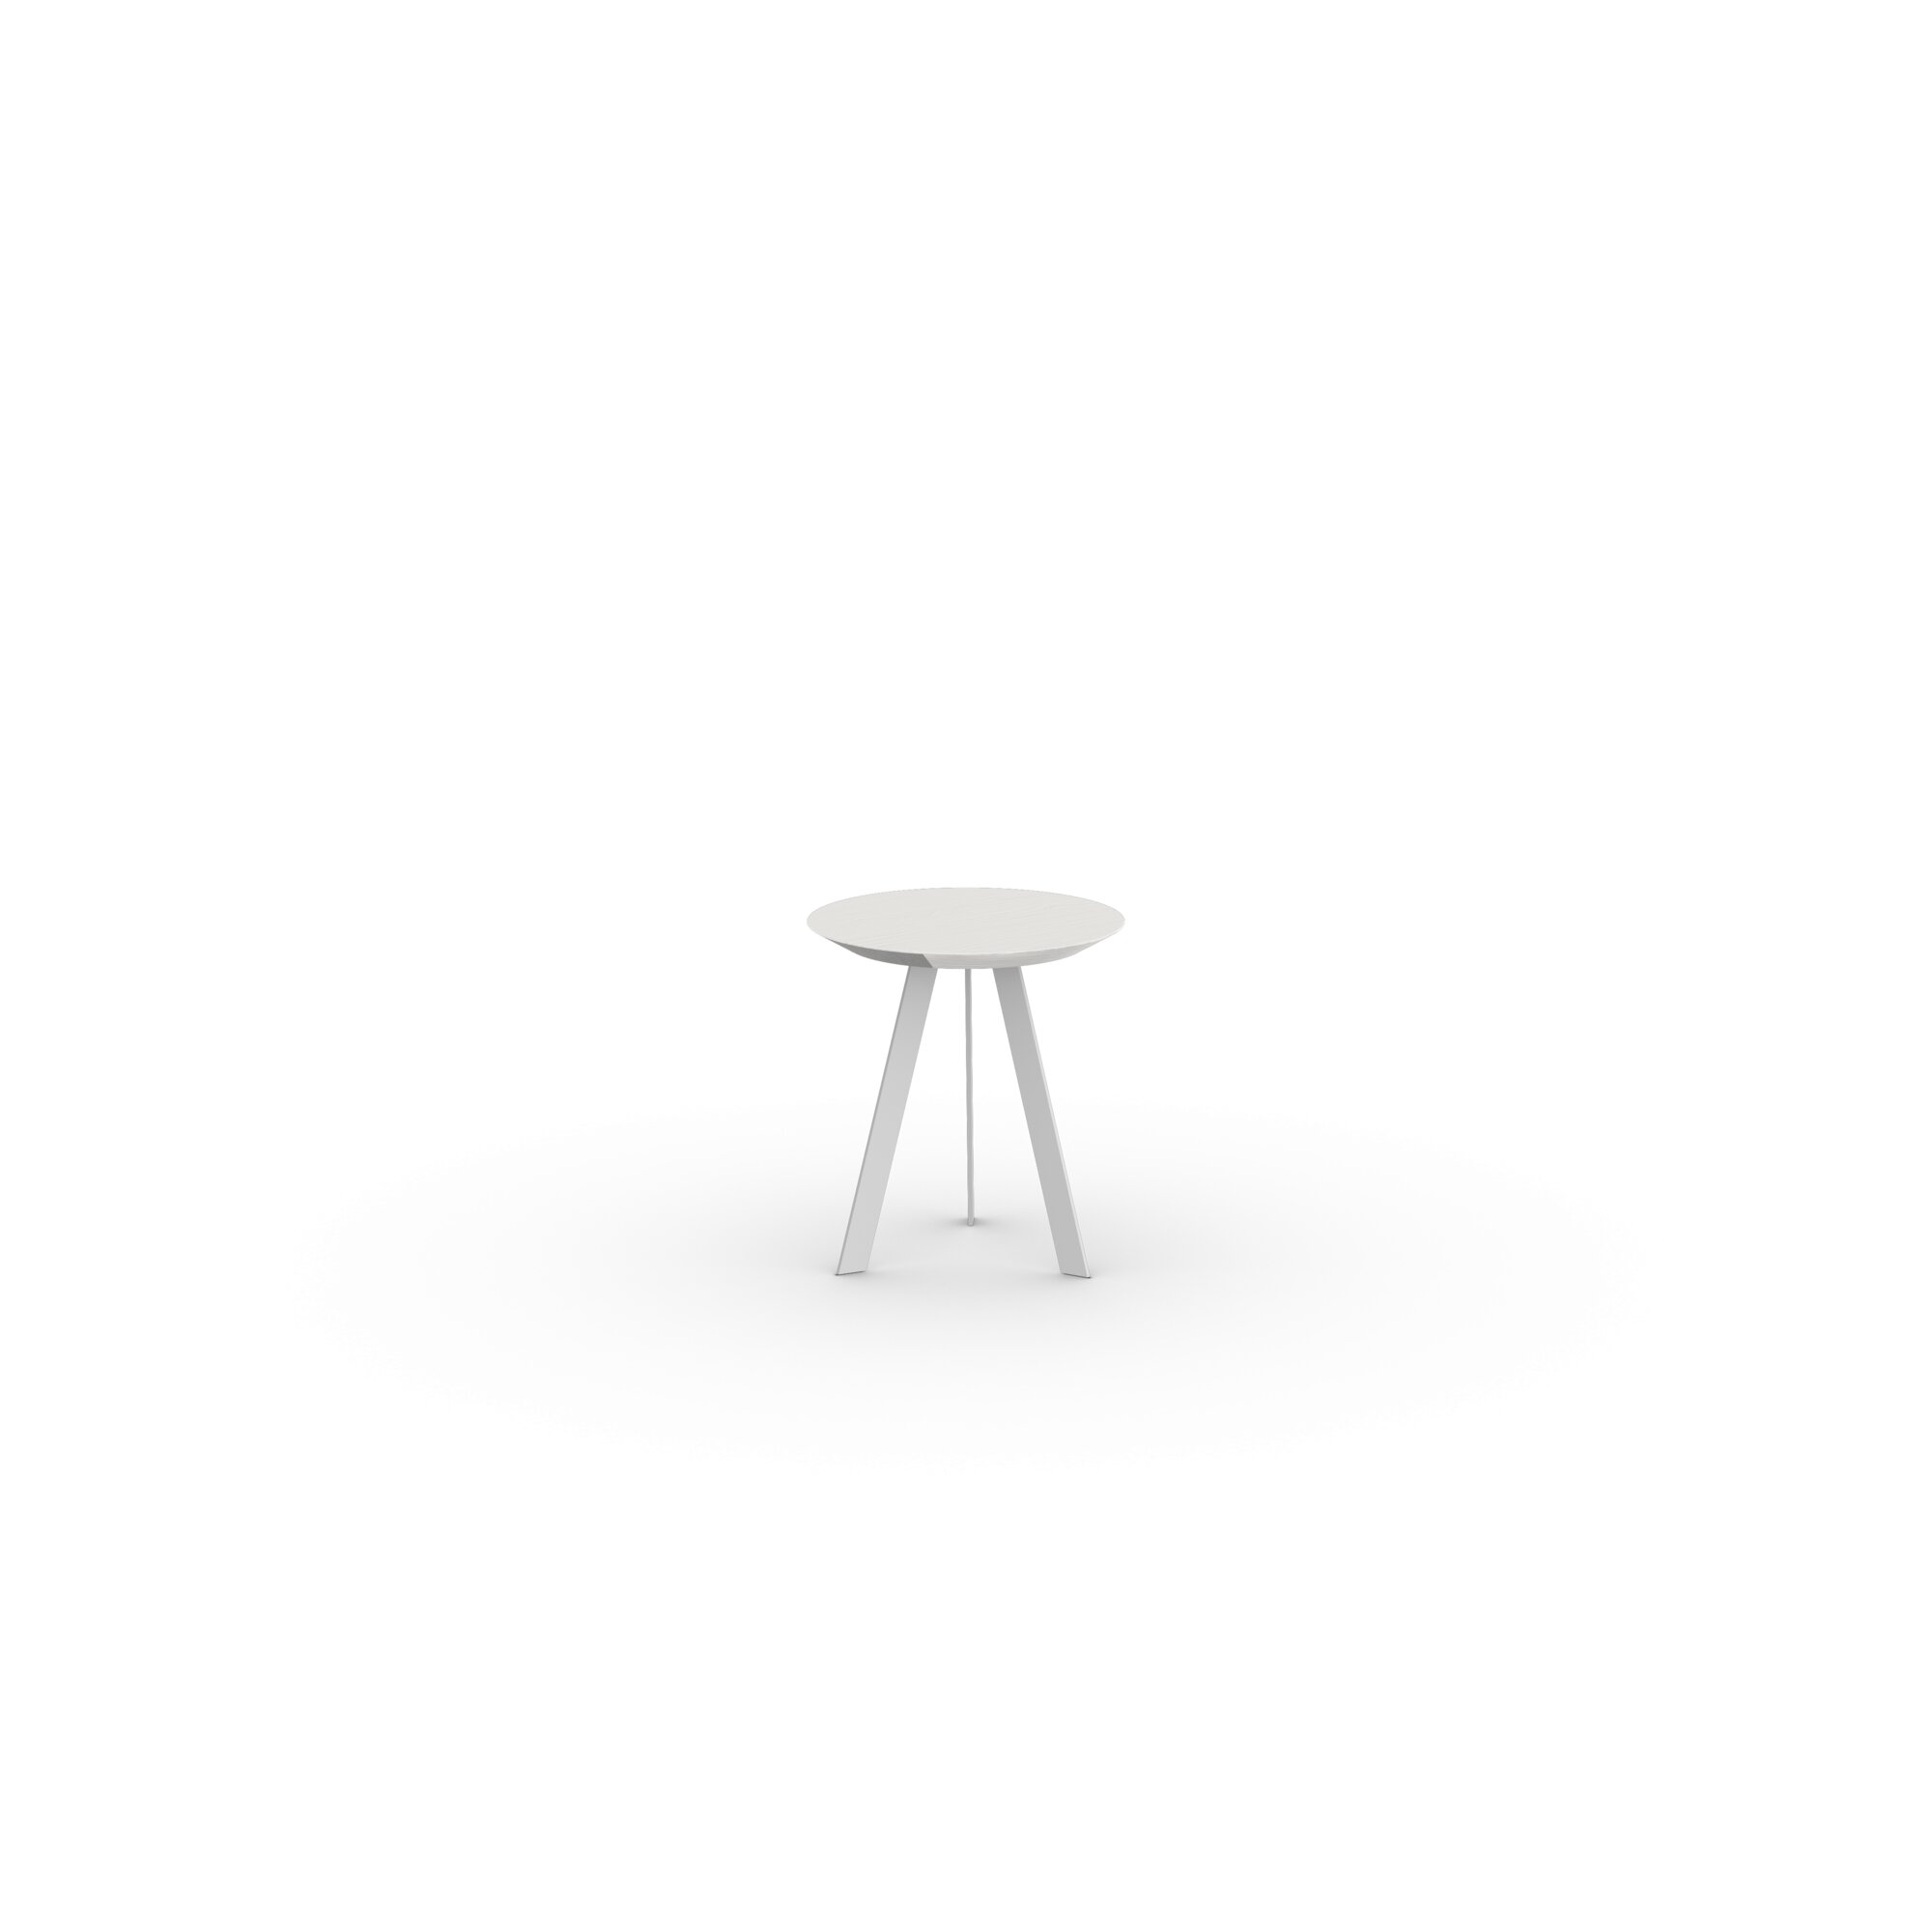 Design Coffee Table | New Co Coffee Table 40 Round White | Oak white lacquer | Studio HENK| 